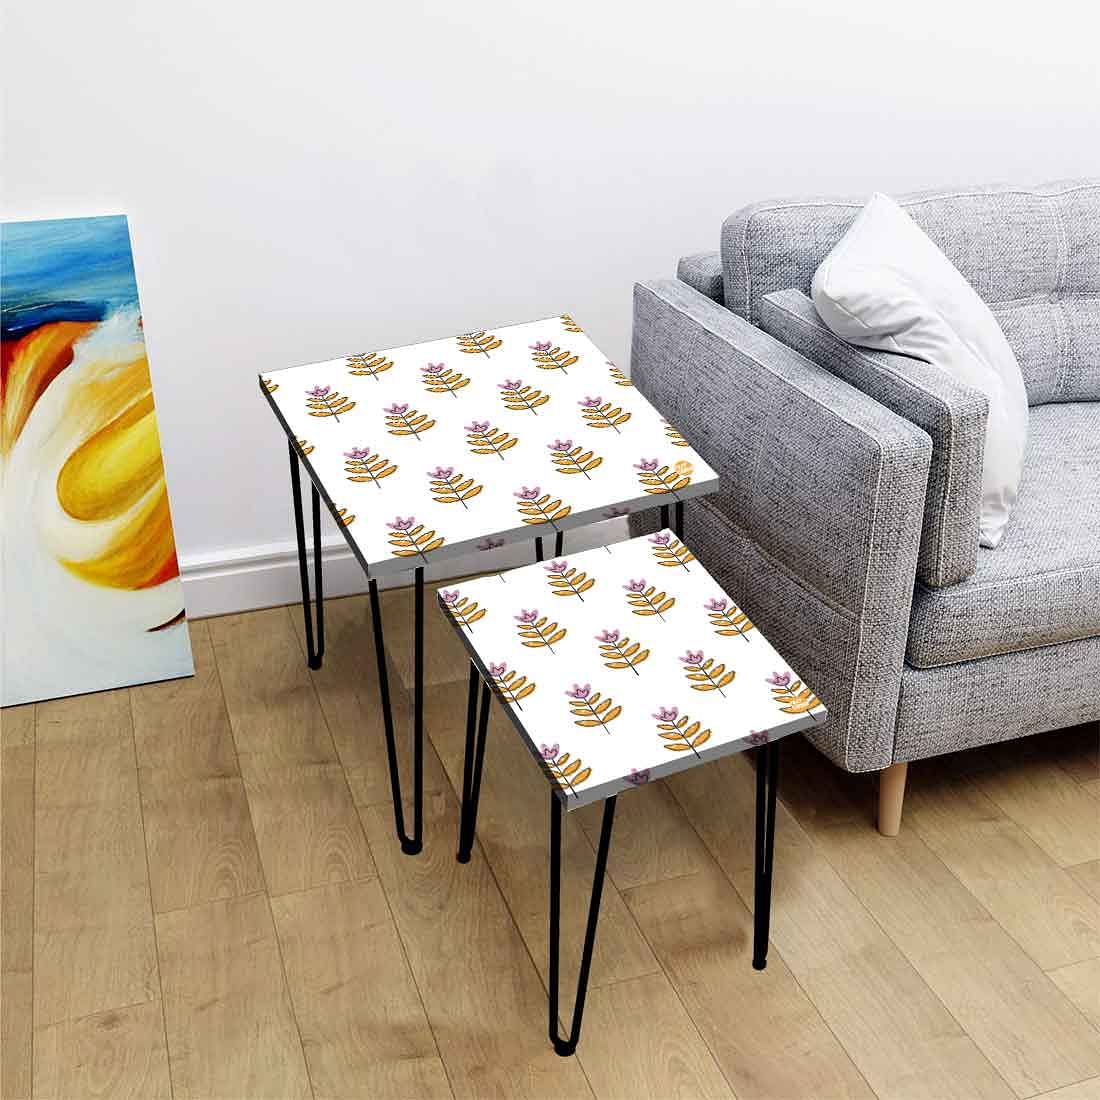 Modern Set of Two Nesting Tables for Living Room Home Decor - Ethnic Leaf Nutcase